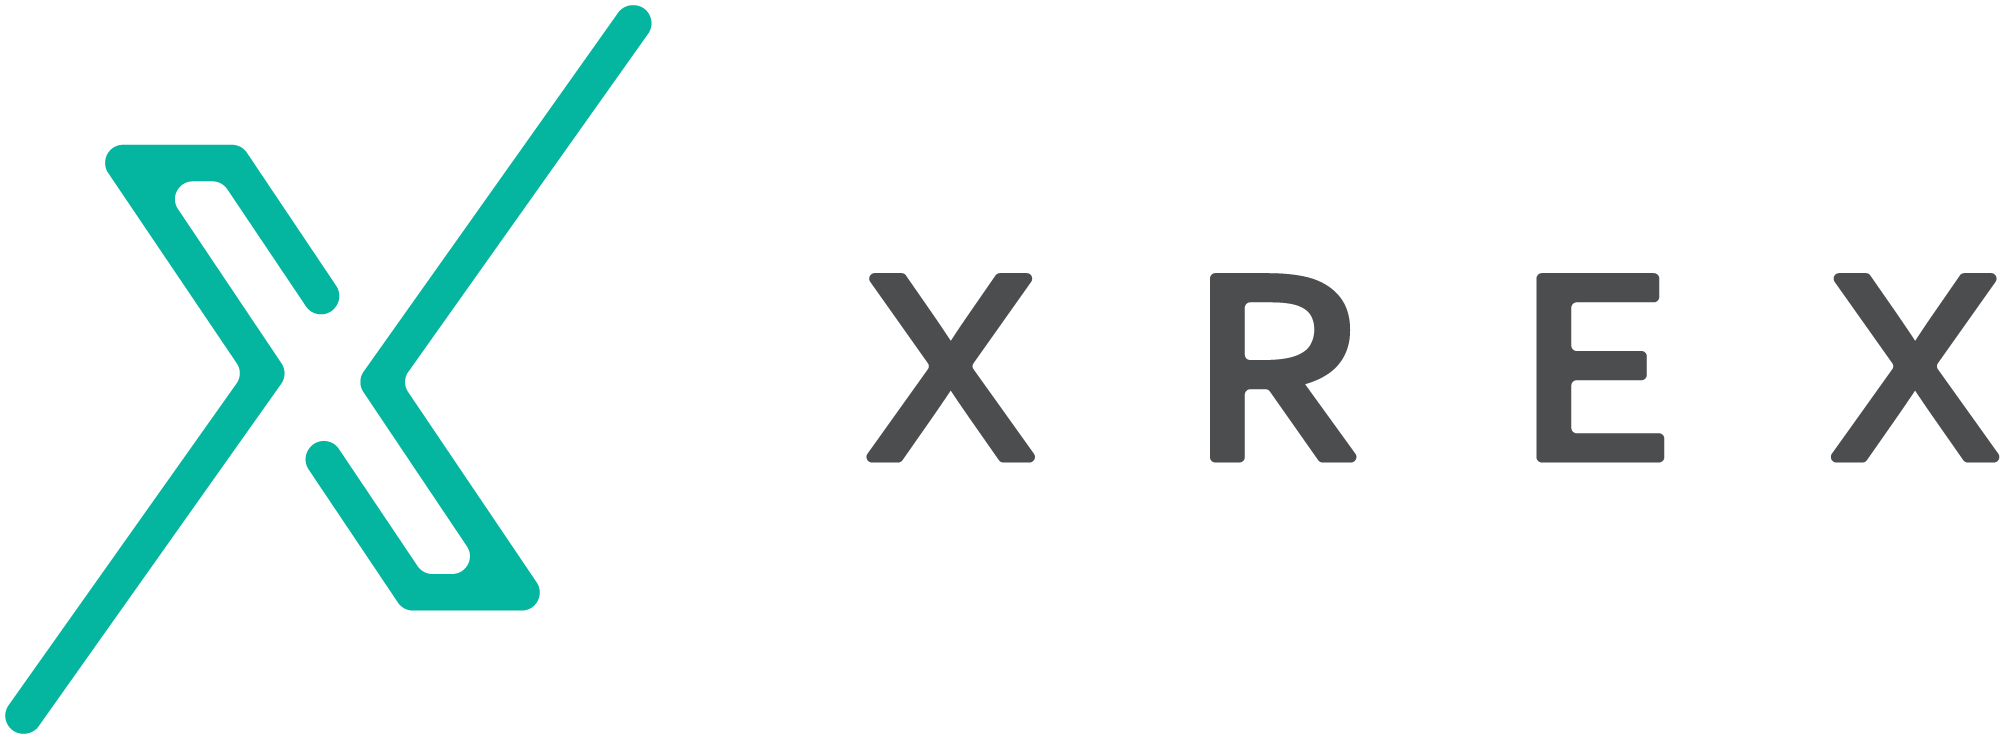 XREX Logo Horizontal HD.png